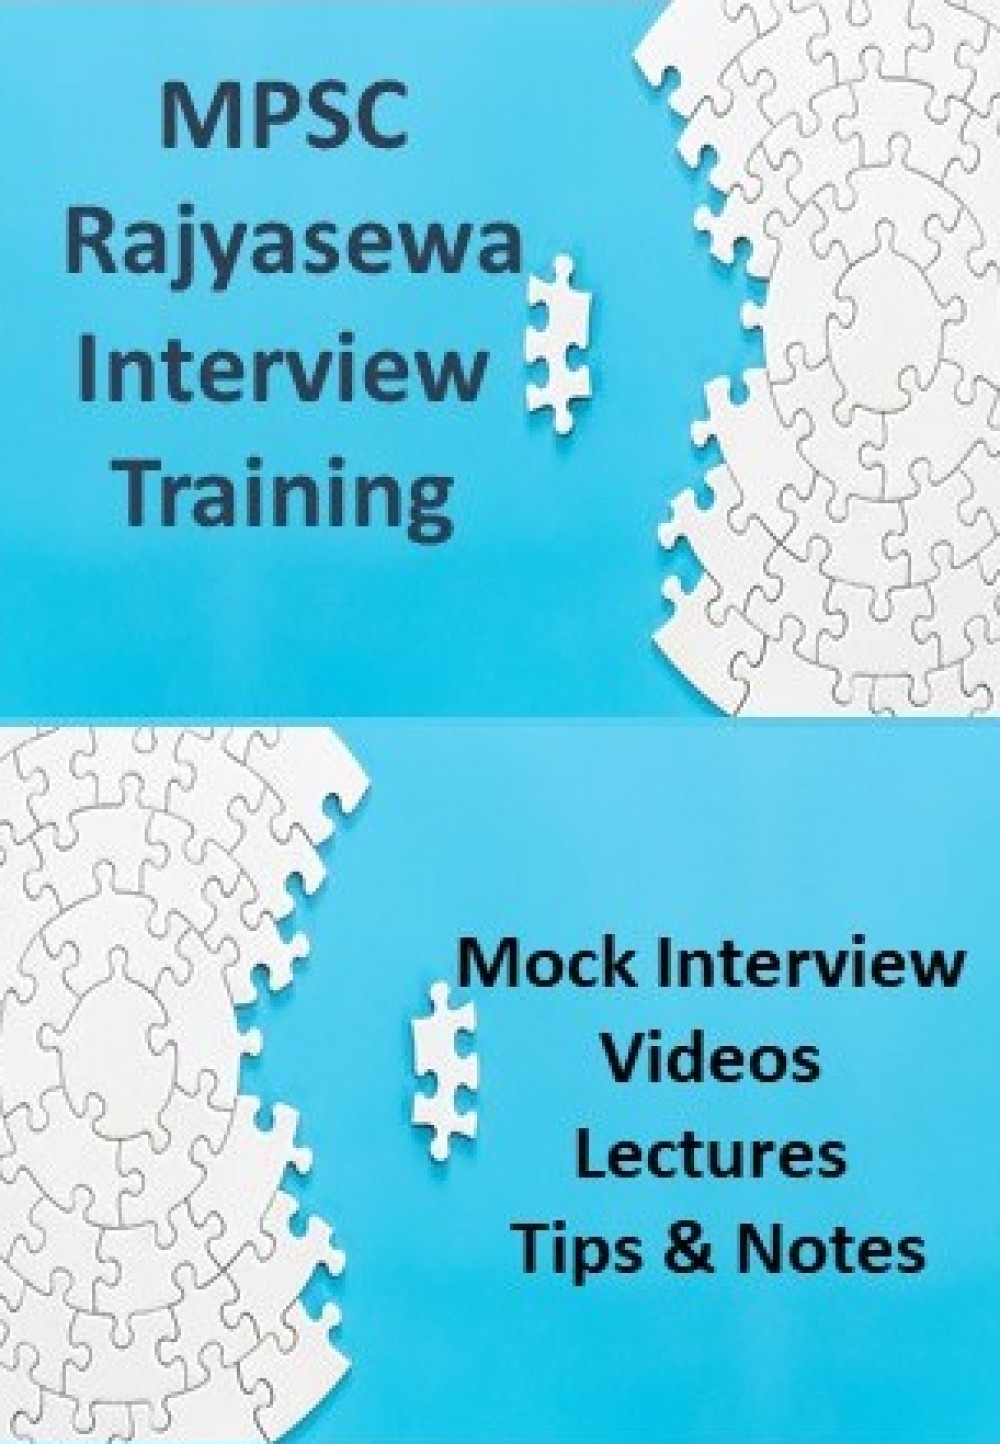 Rajyasewa Interview Preparation